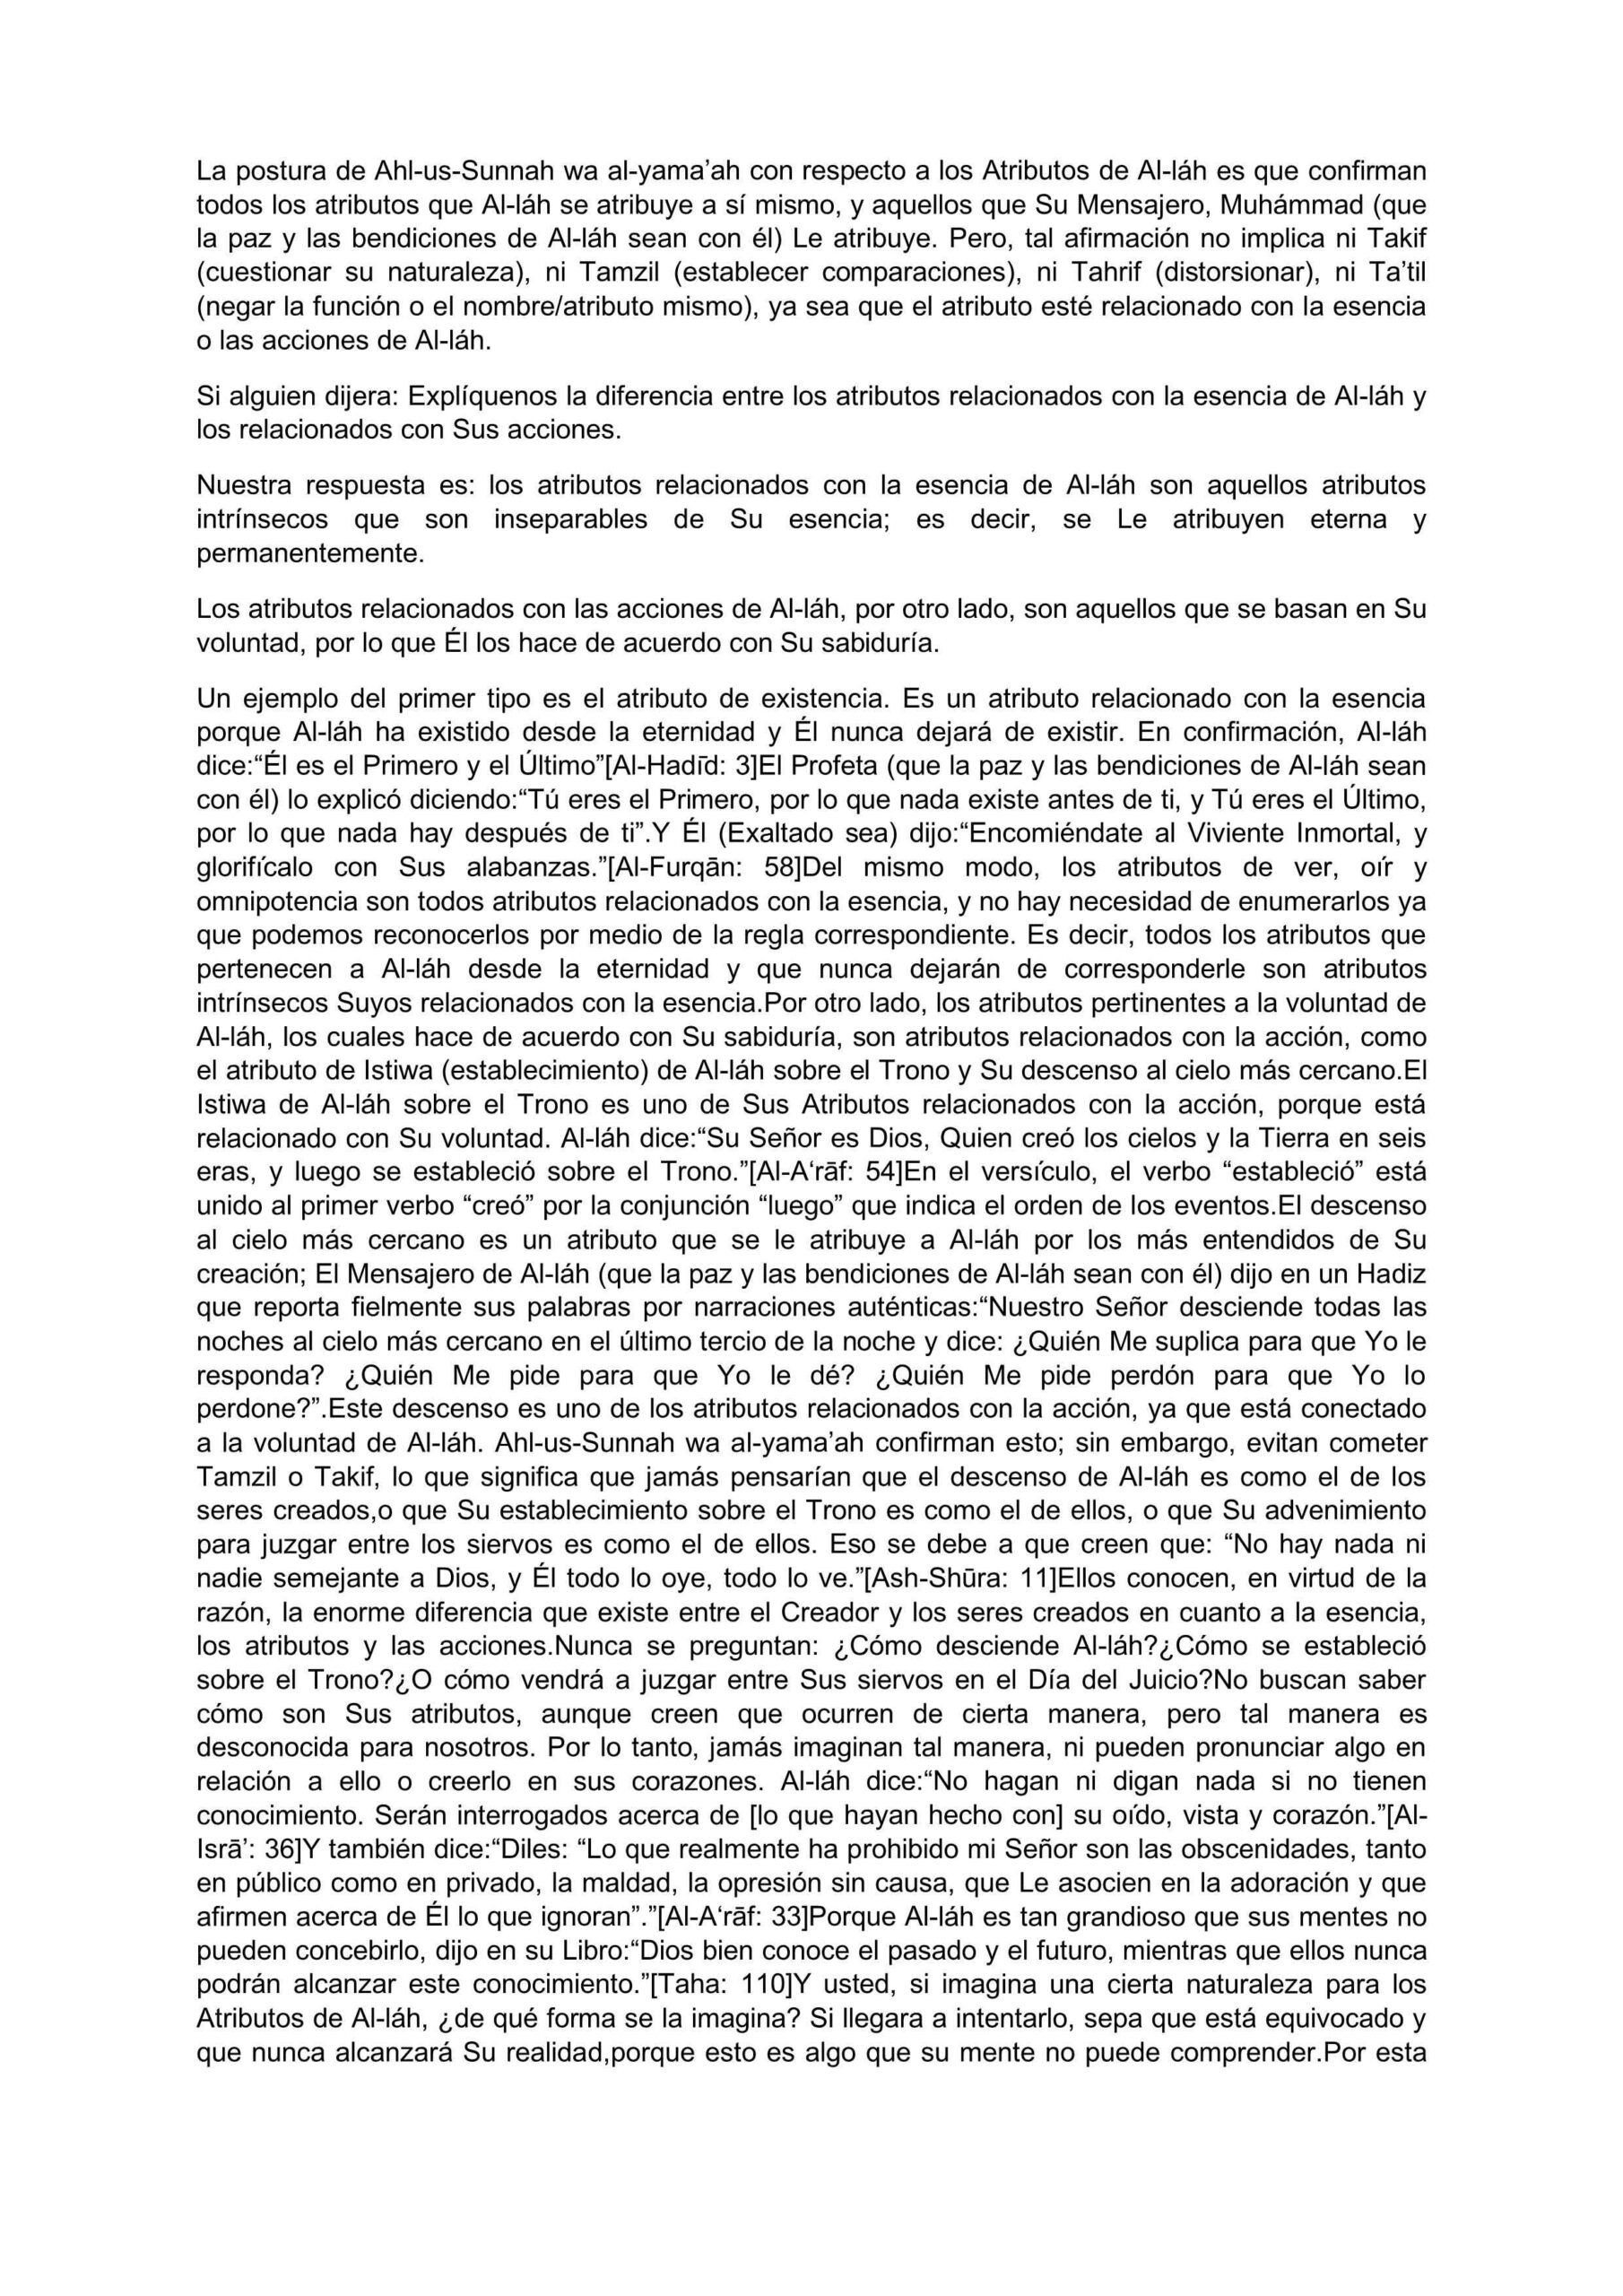 إسباني - أسماء الله وصفاته - Los nombres y los atributos de Al-láh.pdf, 21-Sayfa 